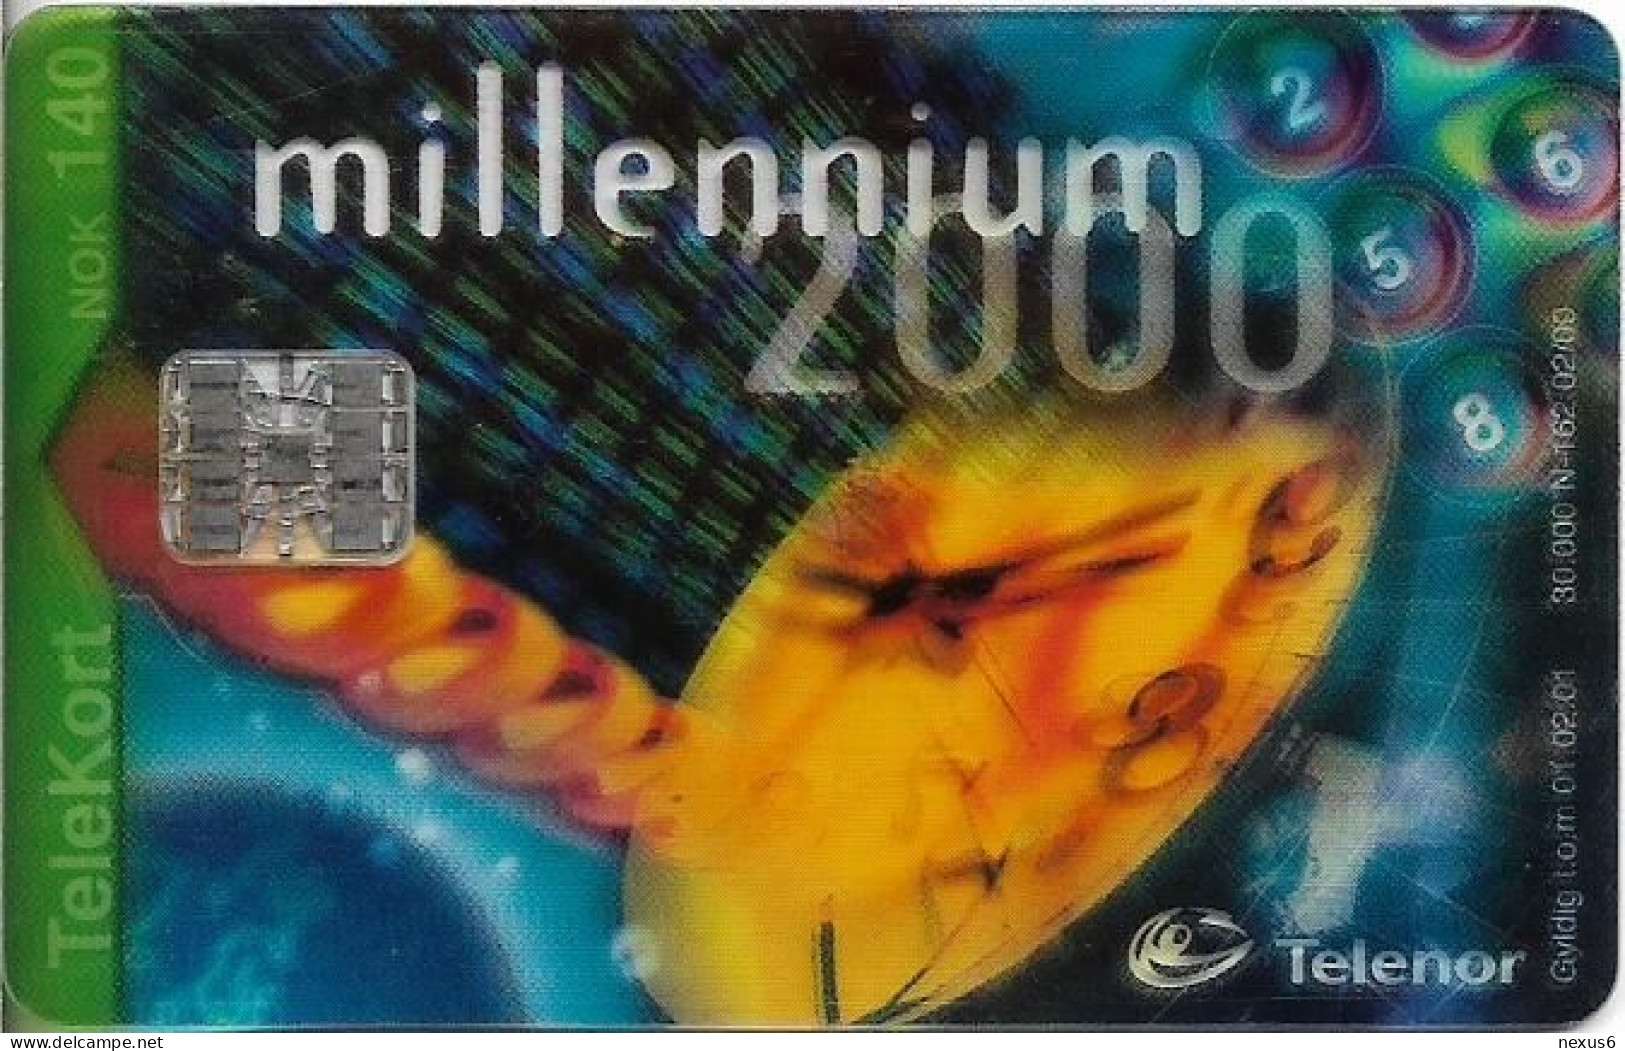 Norway - Telenor - Millennium 2000 (Transparent Card) - N-162 - 02.2000, 140U, 30.000ex, Used - Norwegen